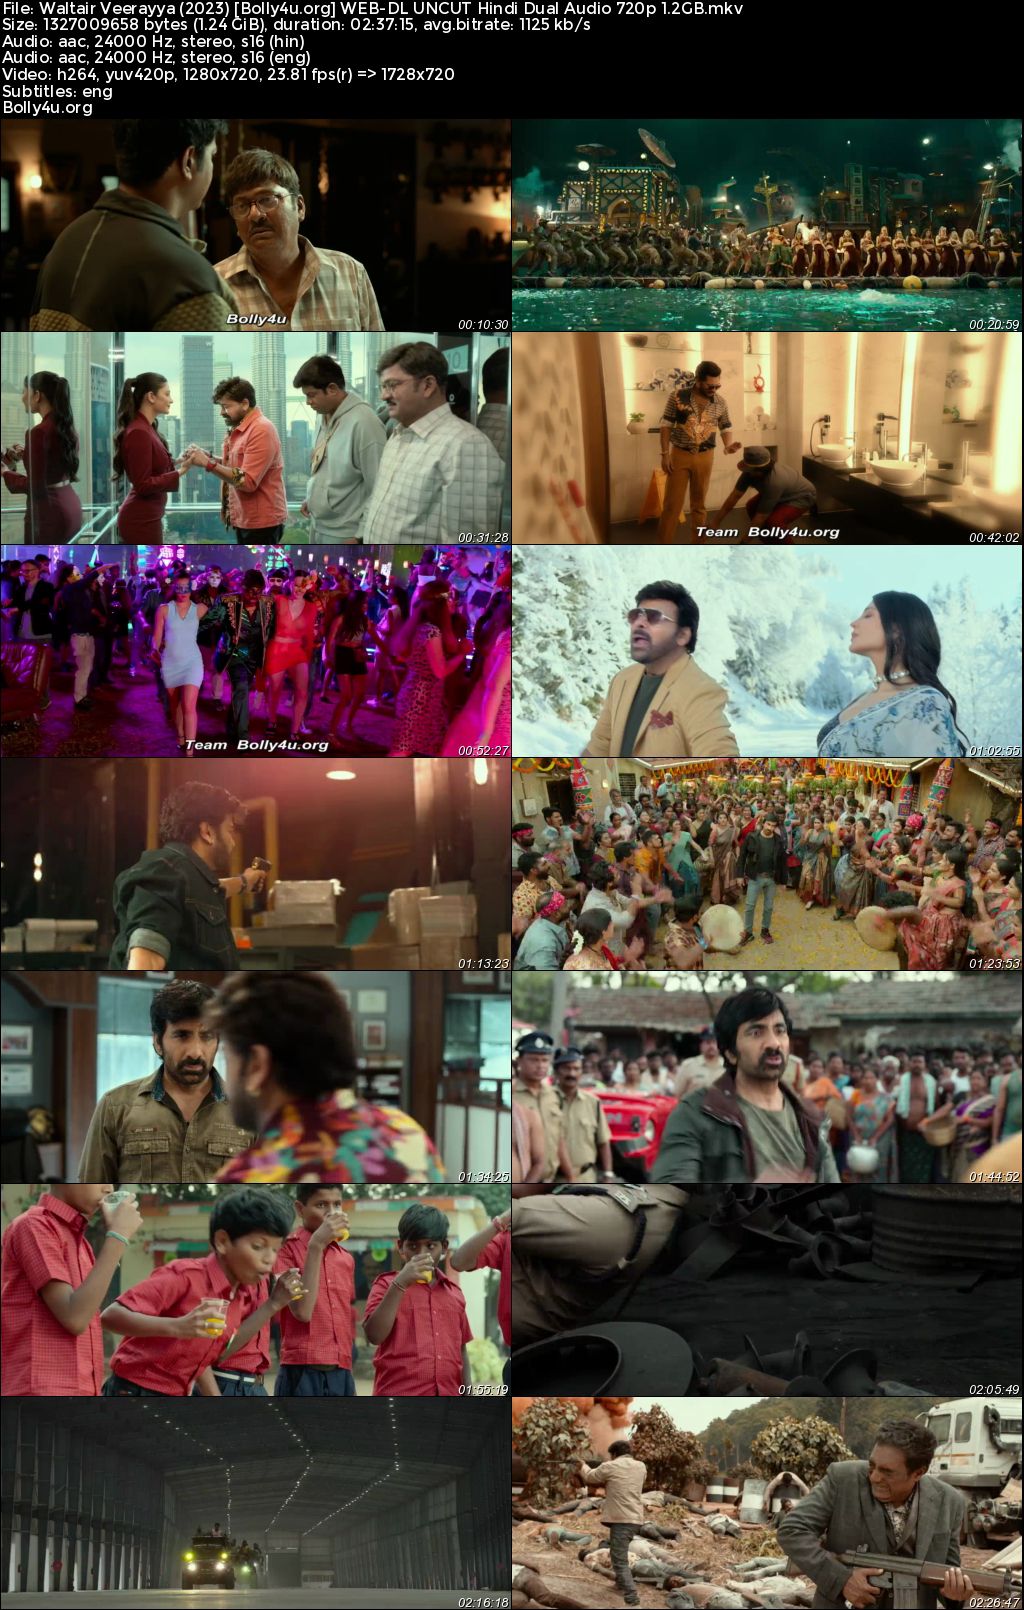 Waltair Veerayya 2023 WEB-DL UNCUT Hindi Dual Audio ORG Full Movie Download 1080p 720p 480p